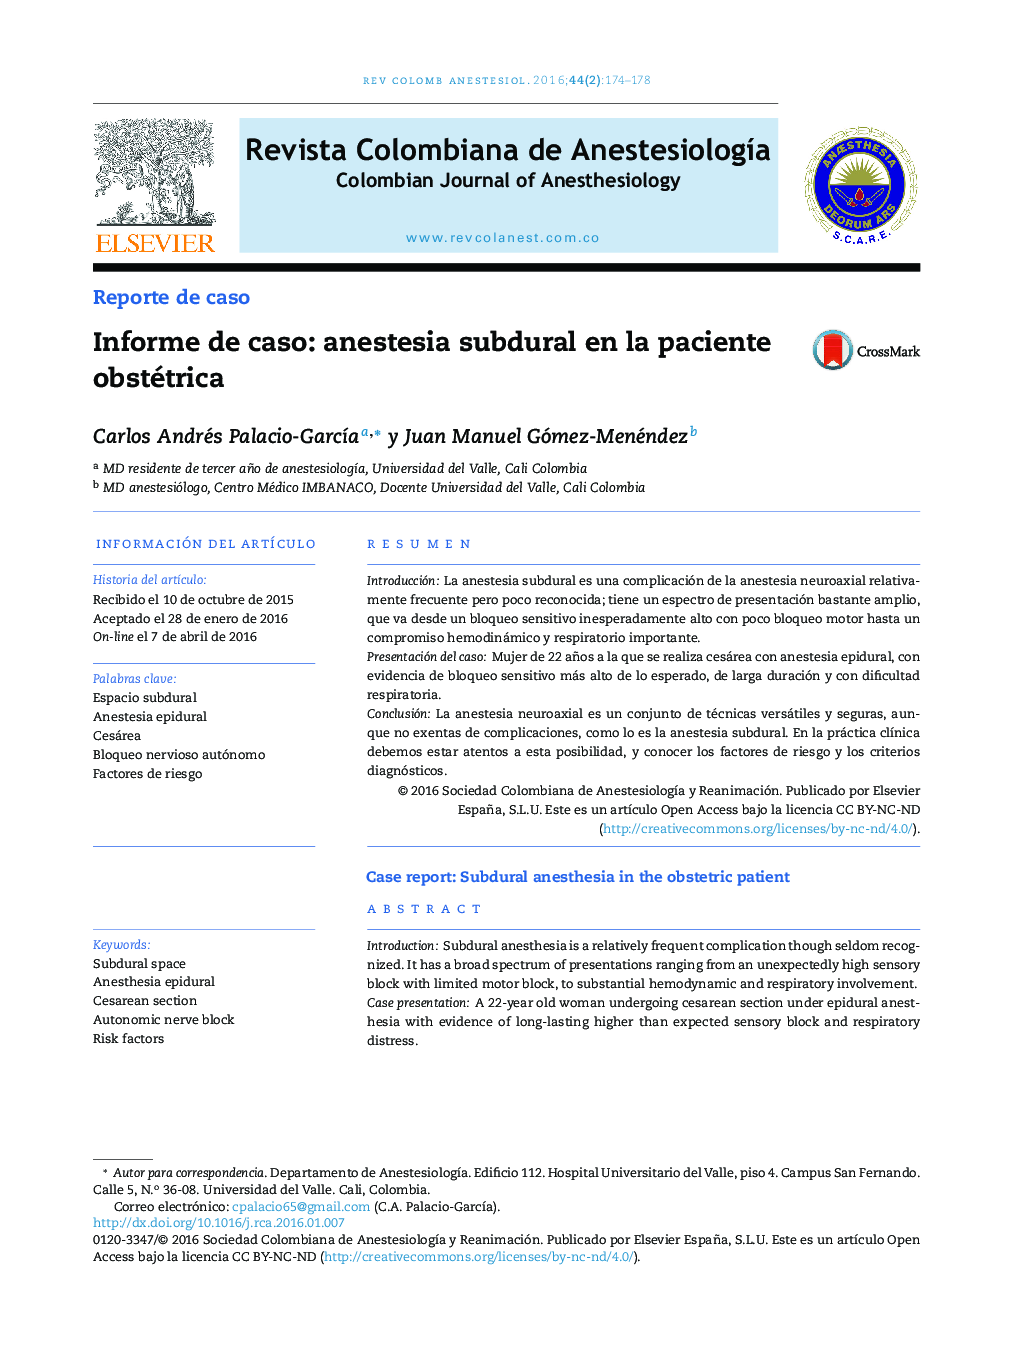 Informe de caso: anestesia subdural en la paciente obstétrica